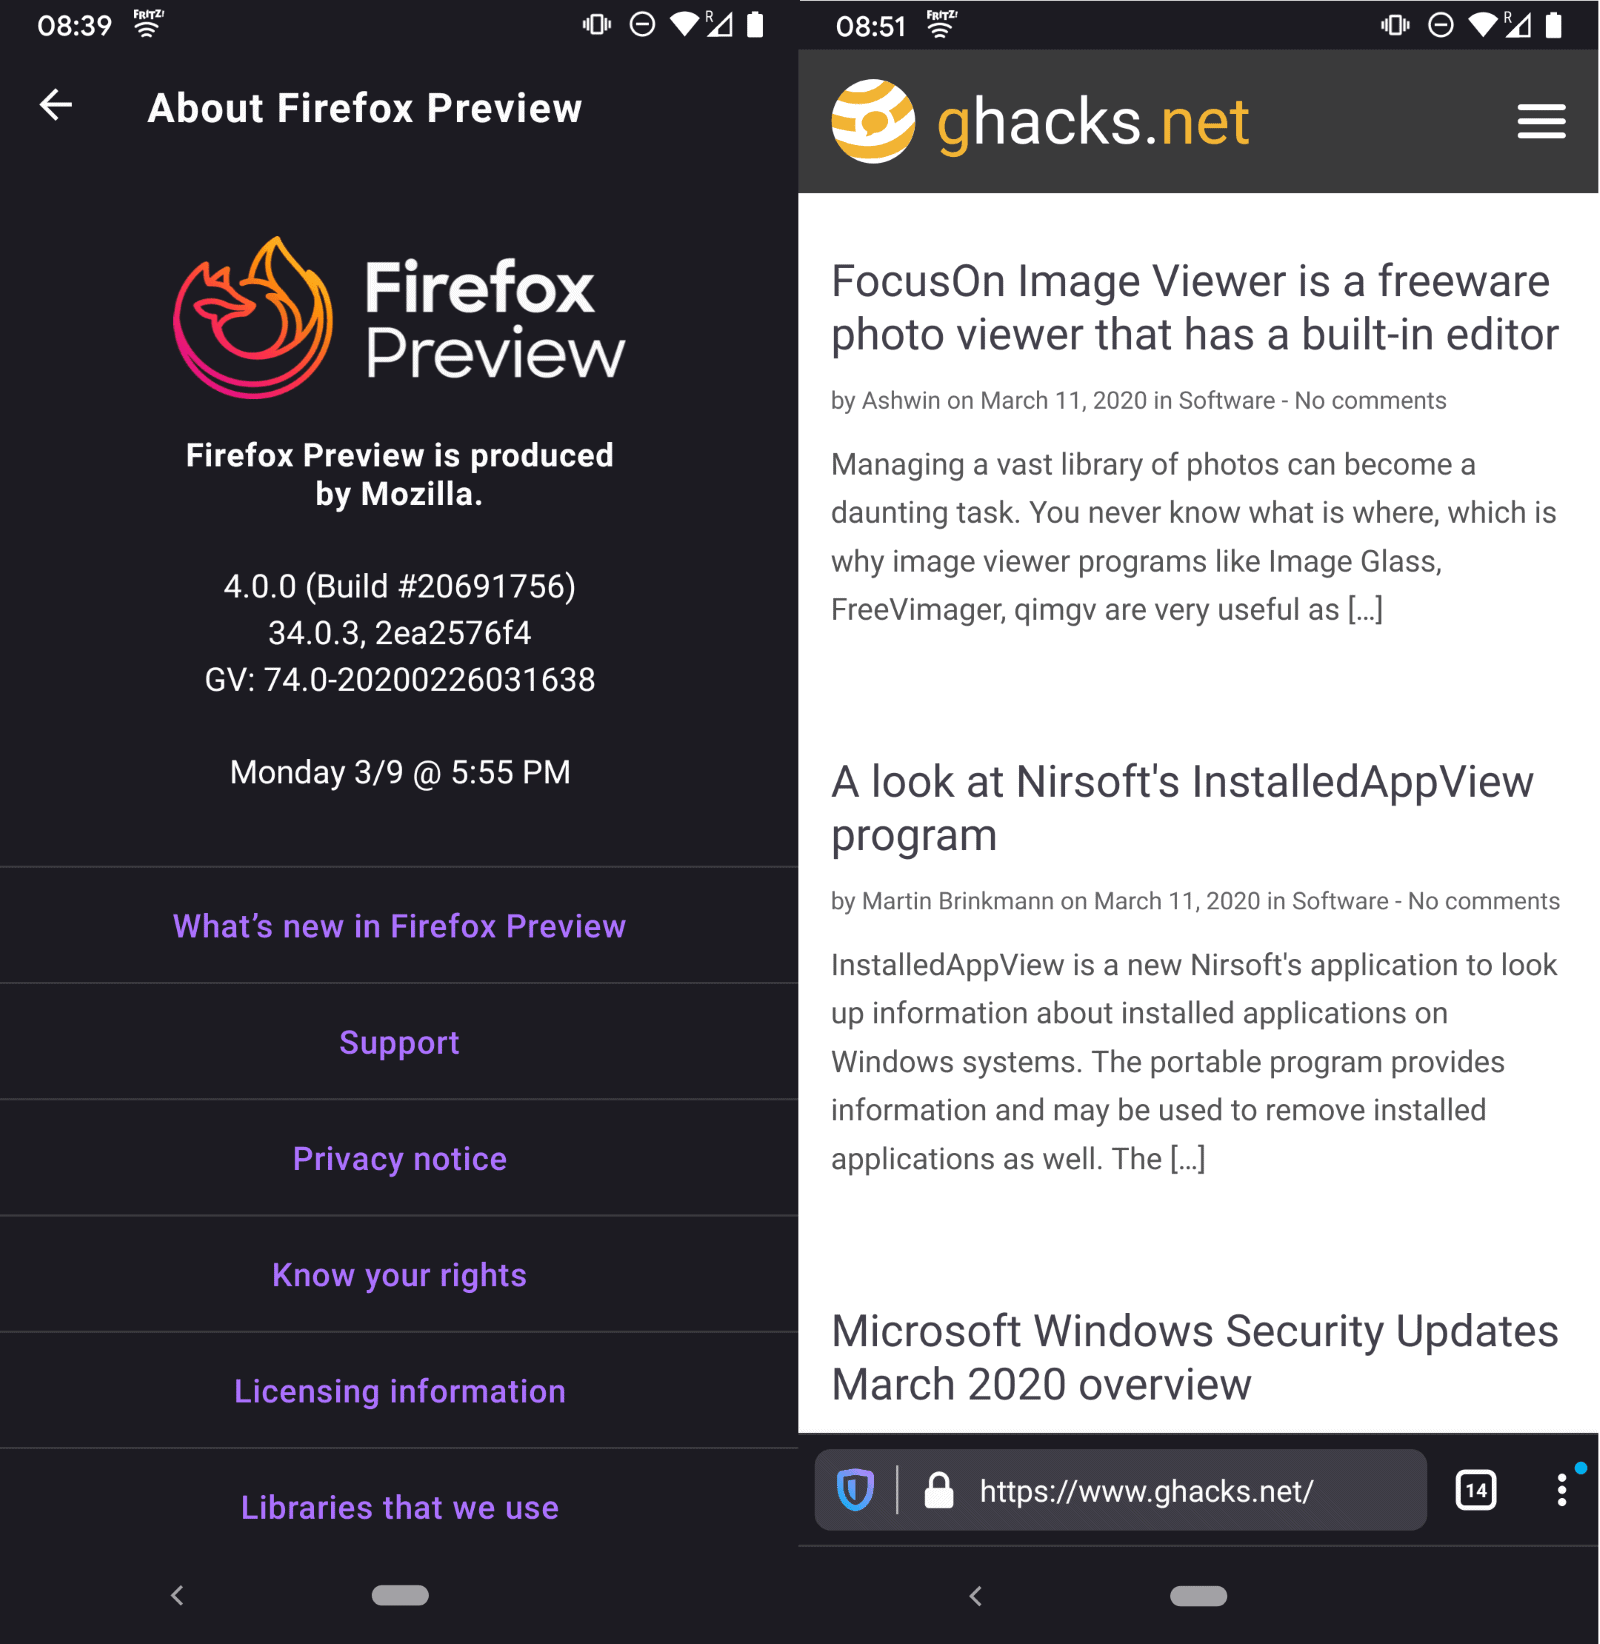 ublock origin android firefox